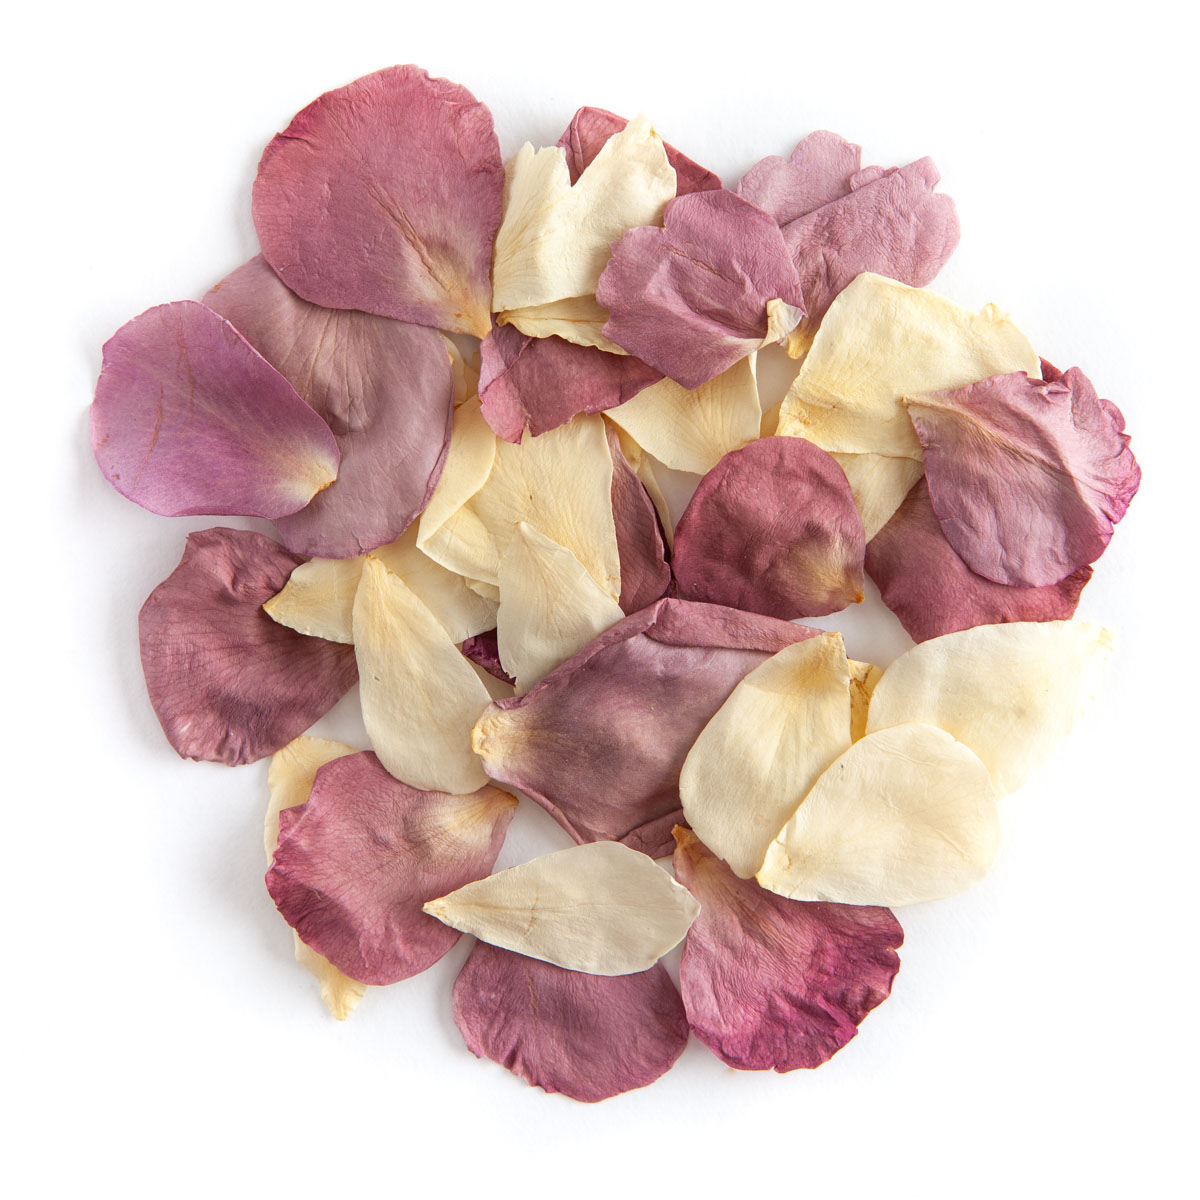 Lilac & Cream rose petals - Biodegradable Rose Petal Confetti - Real Flower Petal Confetti